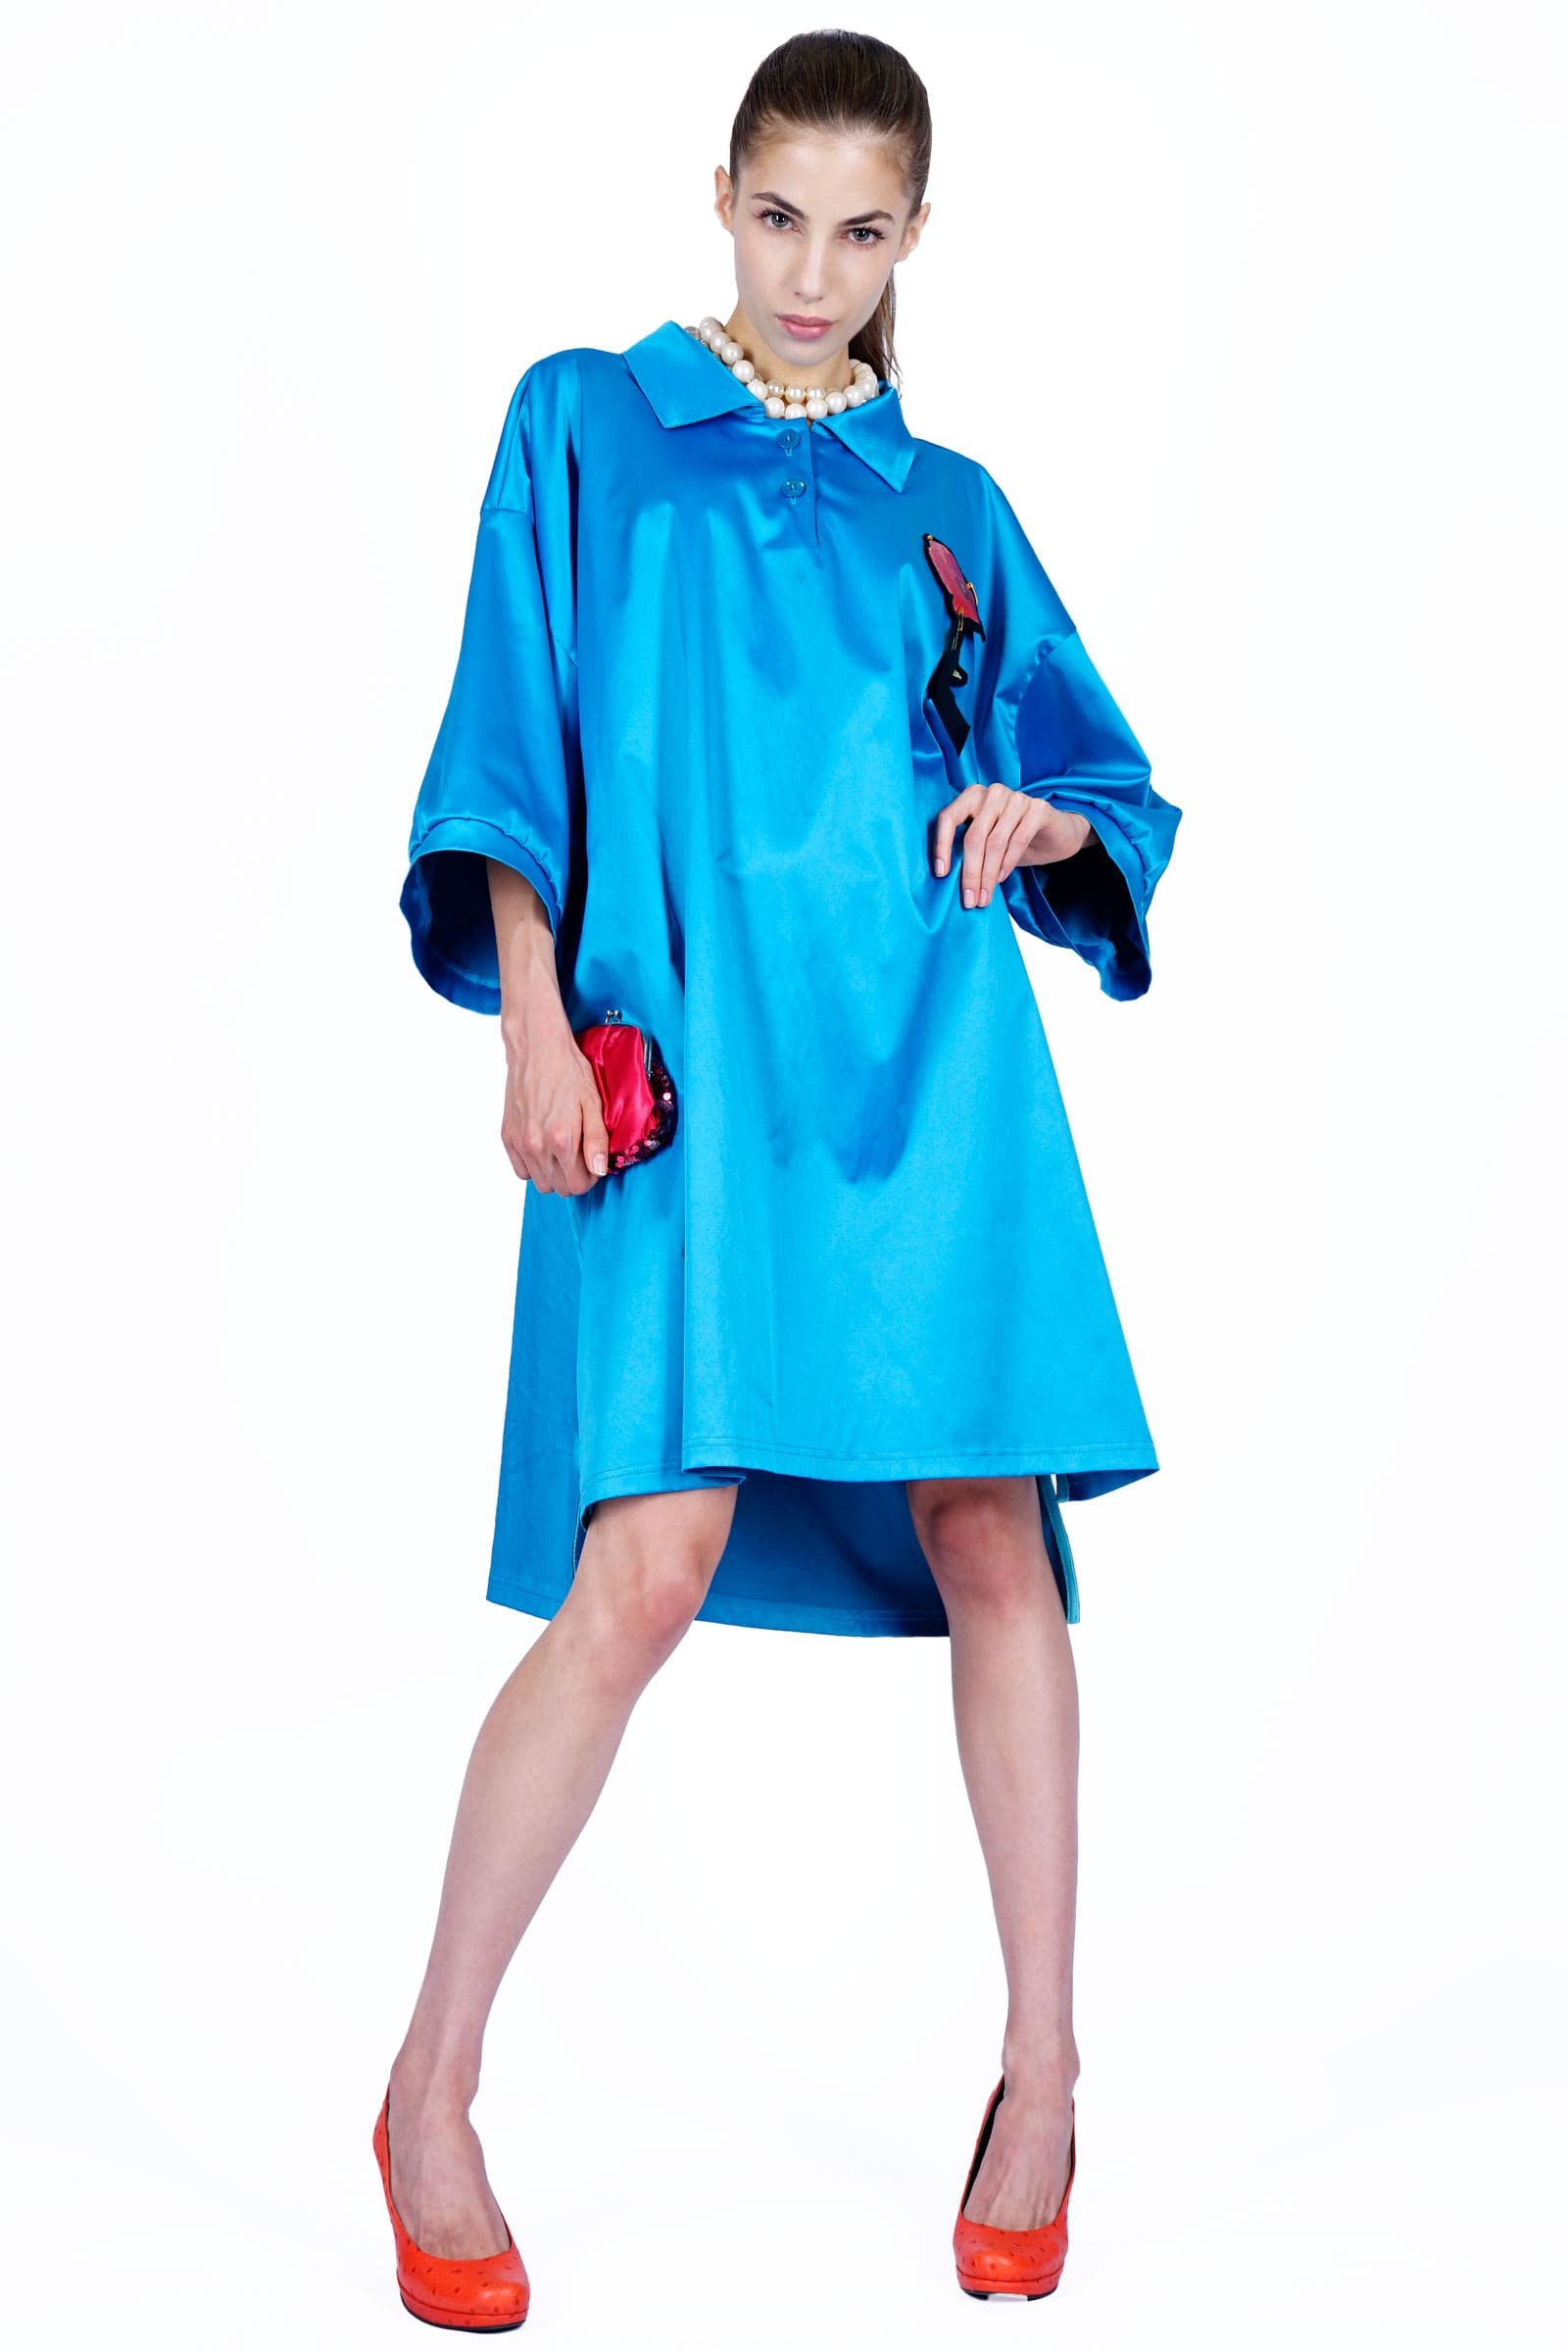 Blue poppy polo dress